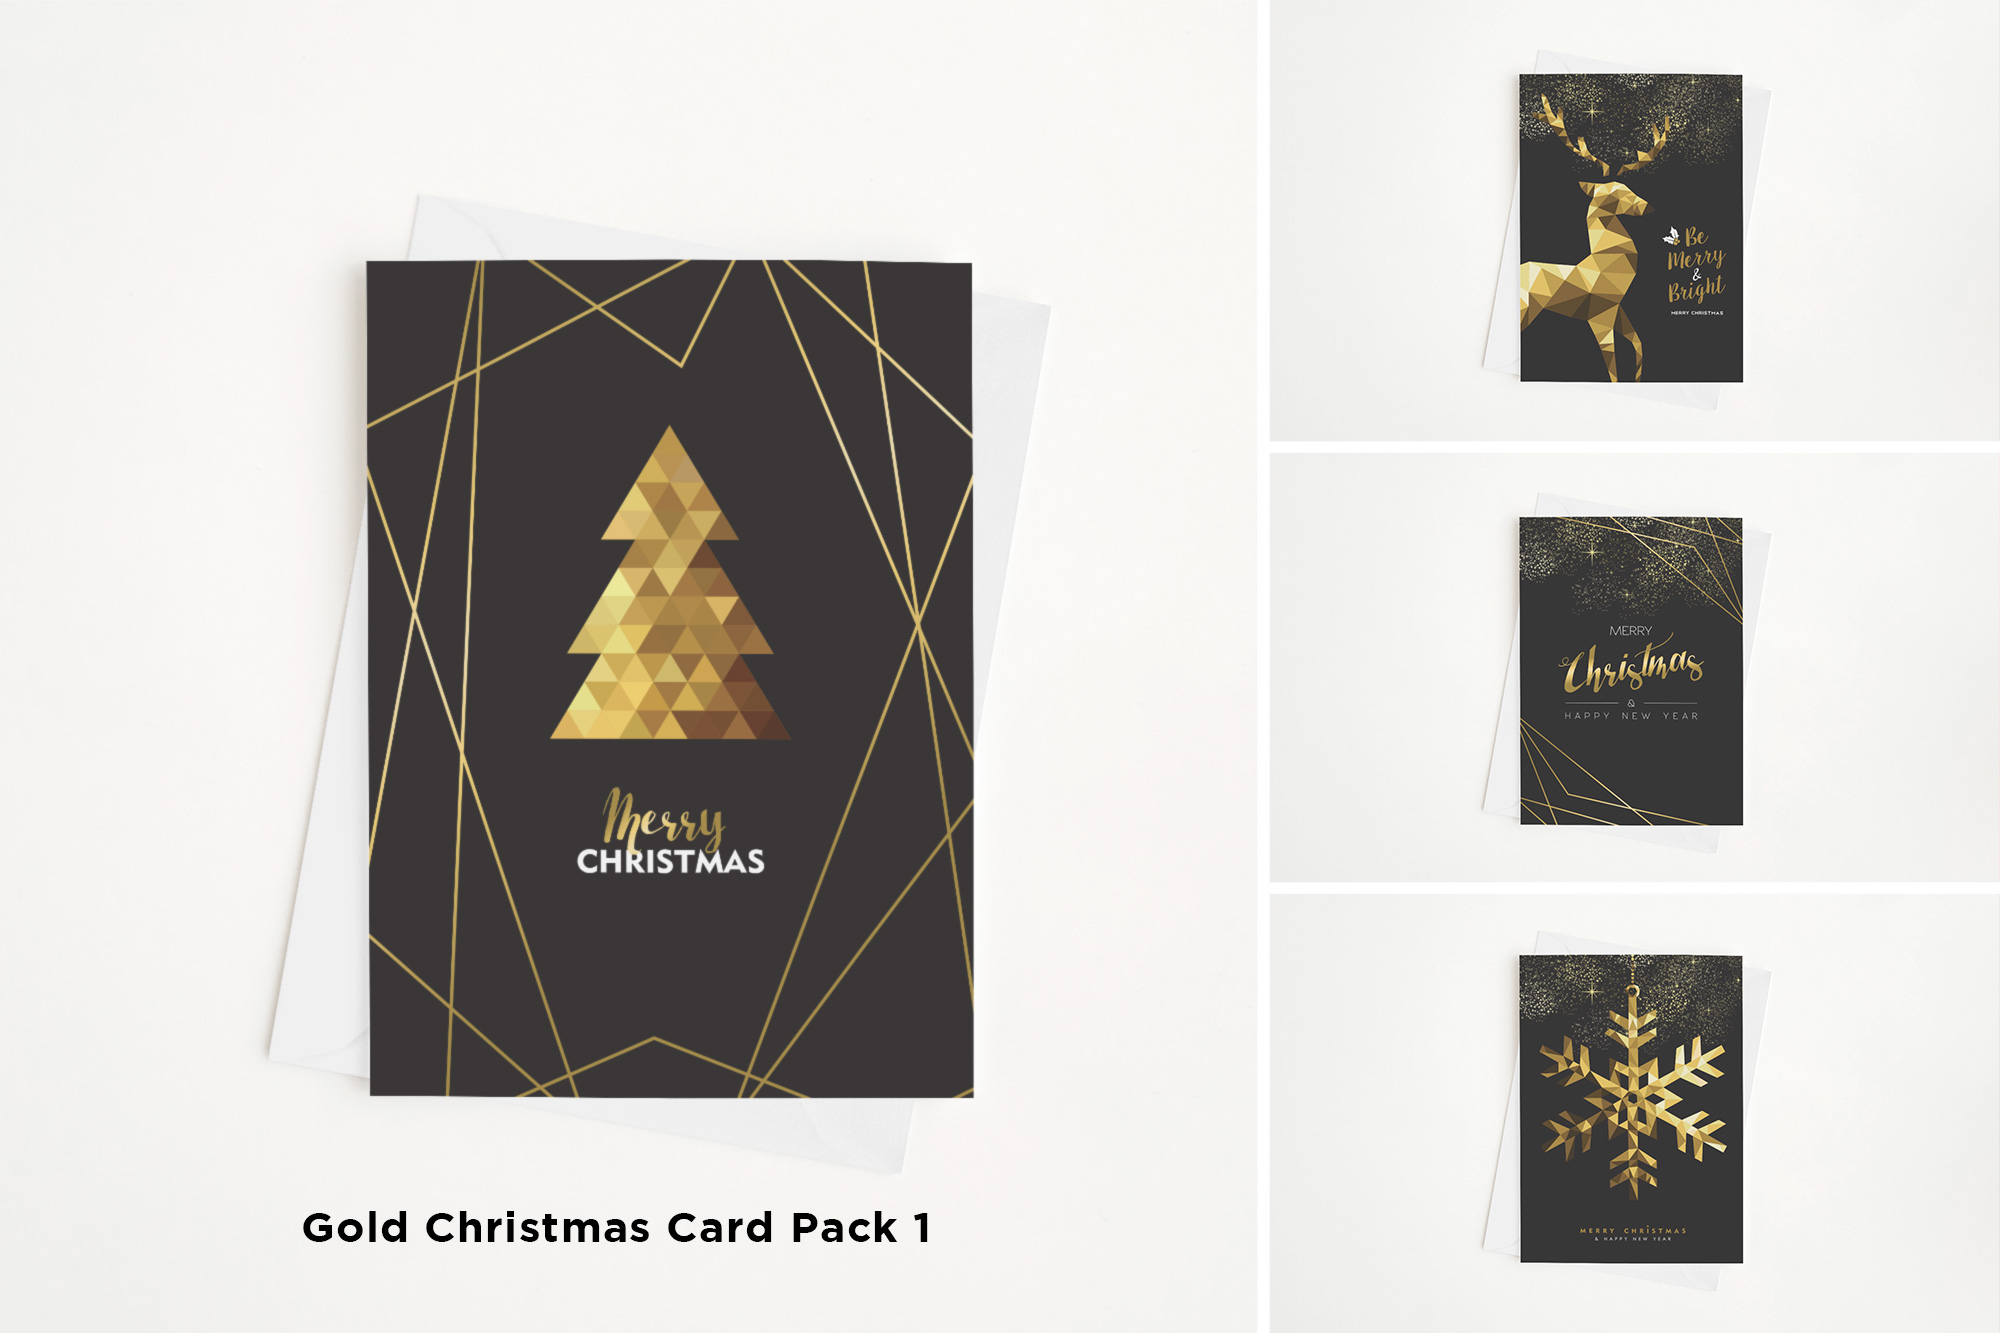 Gold Christmas Card Pack 1 Mockup